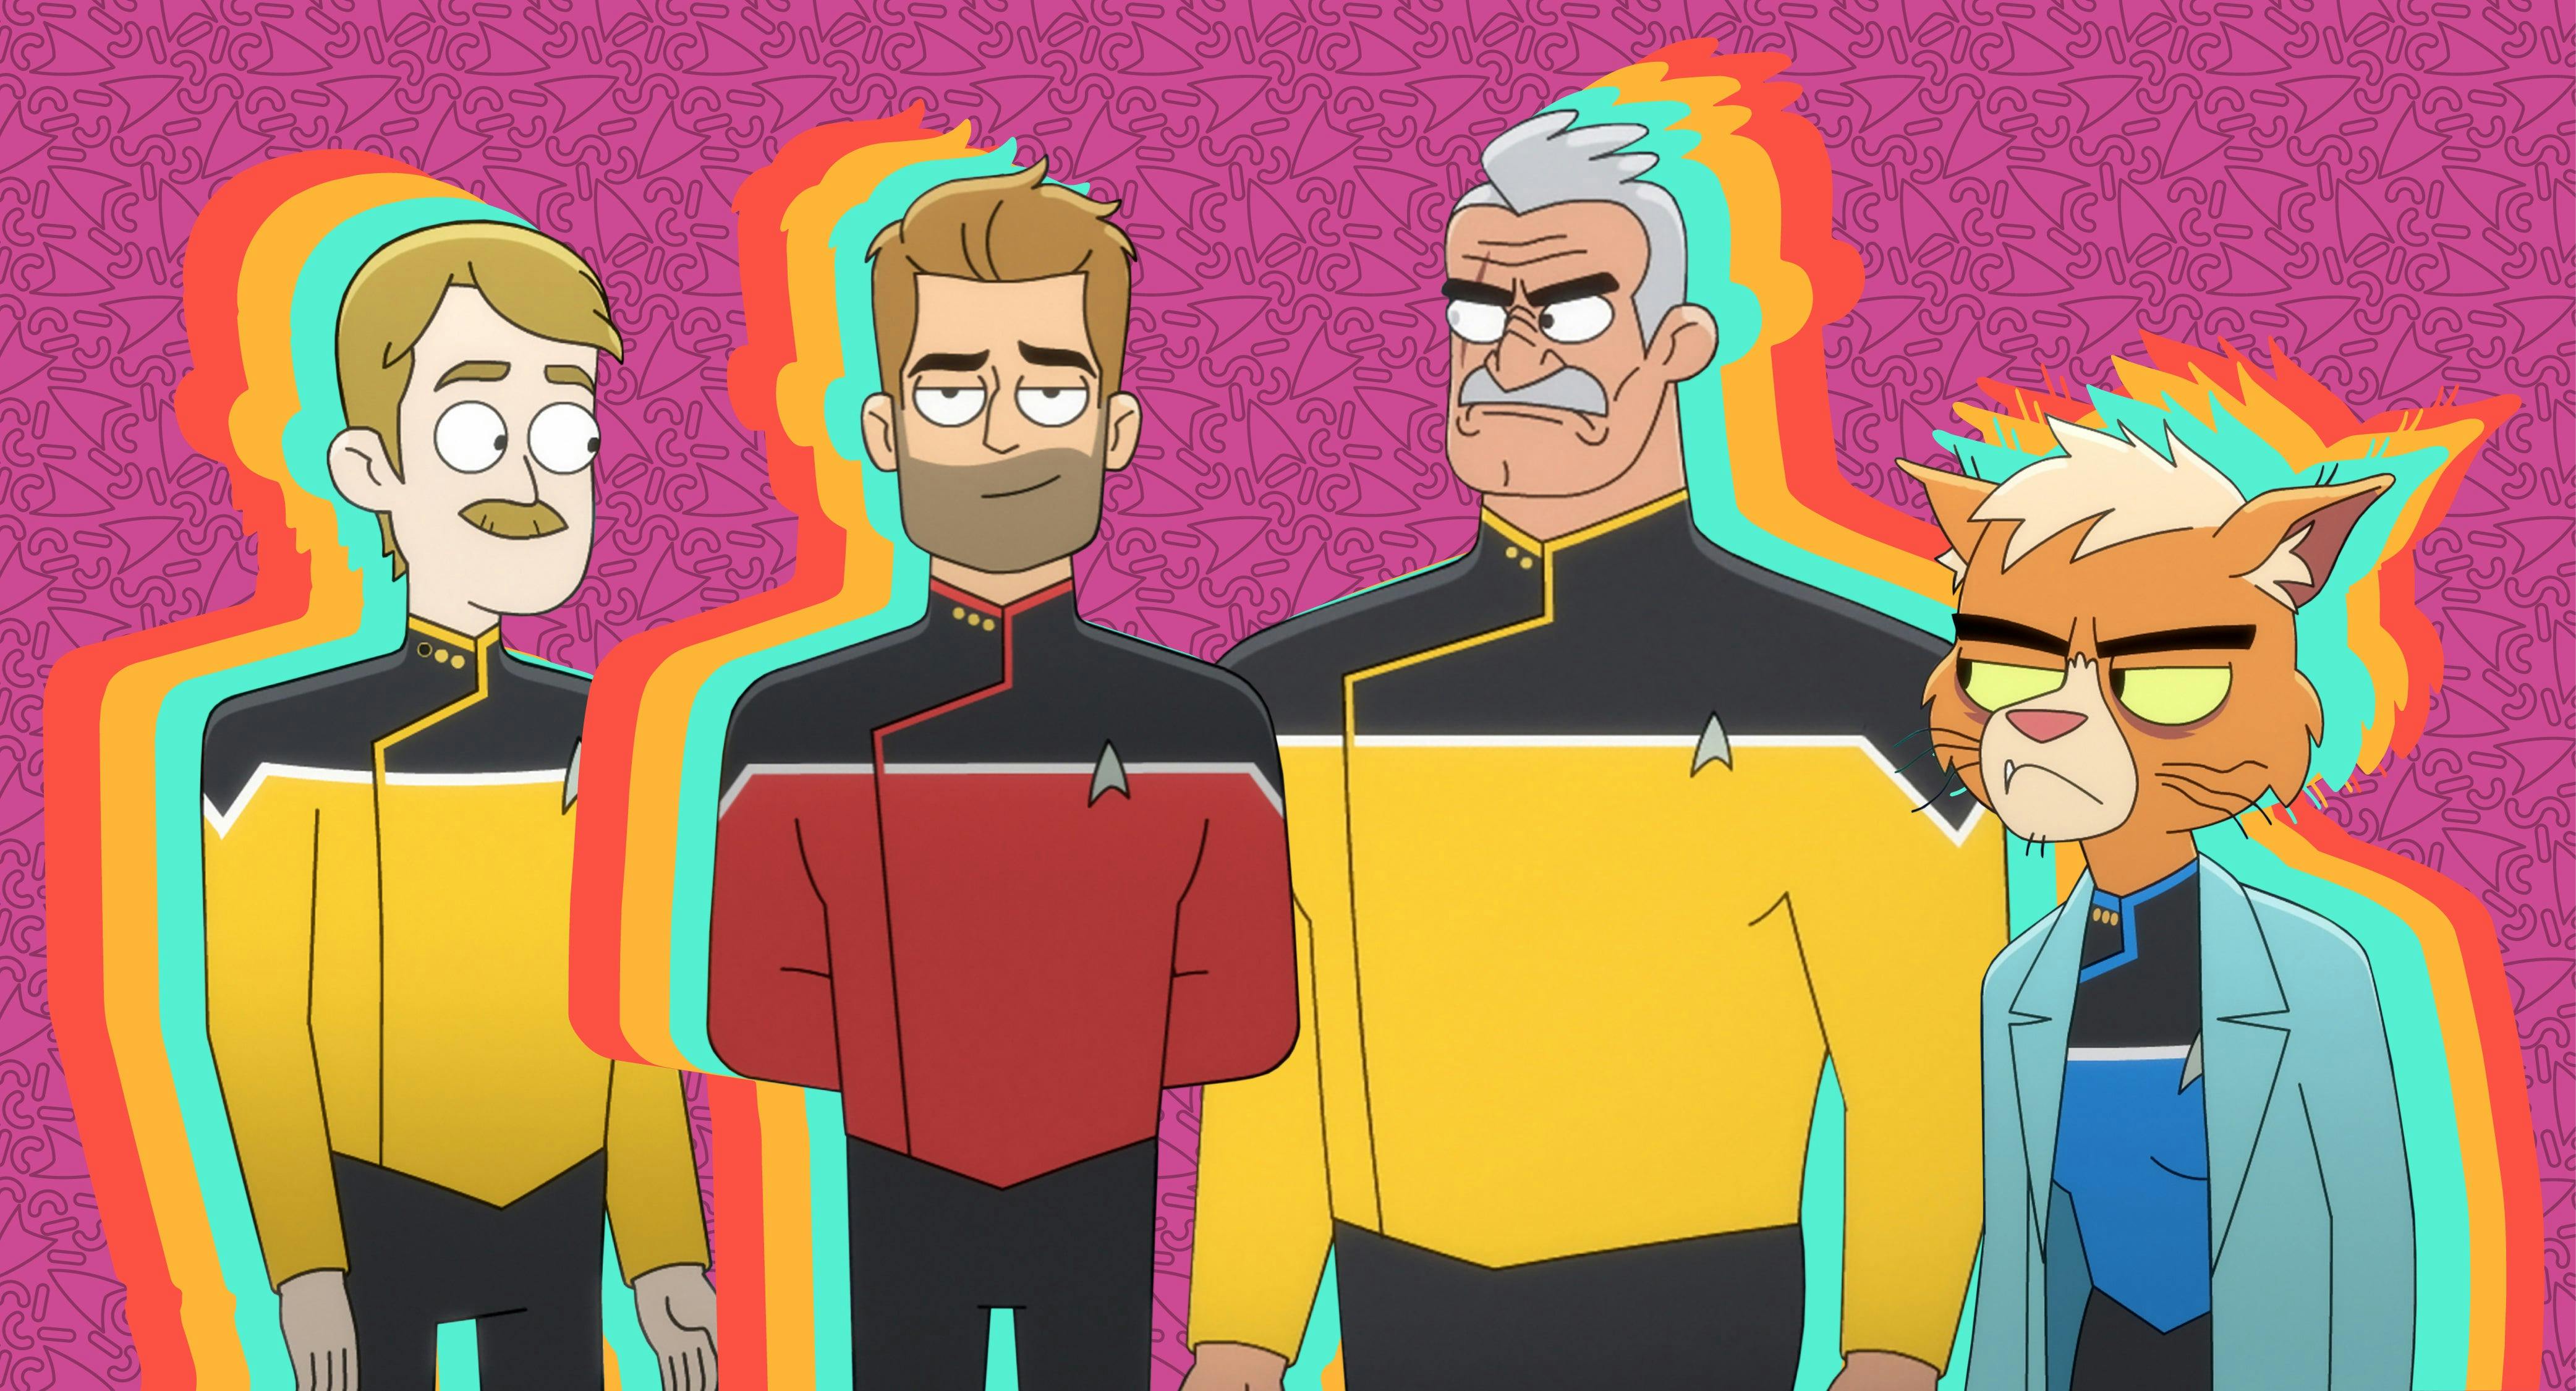 Illustrated banner of the Star Trek: Lower Decks' Bridge crew - Andy Billups, Jack Ransom, Shaxs, and Dr. T'Ana